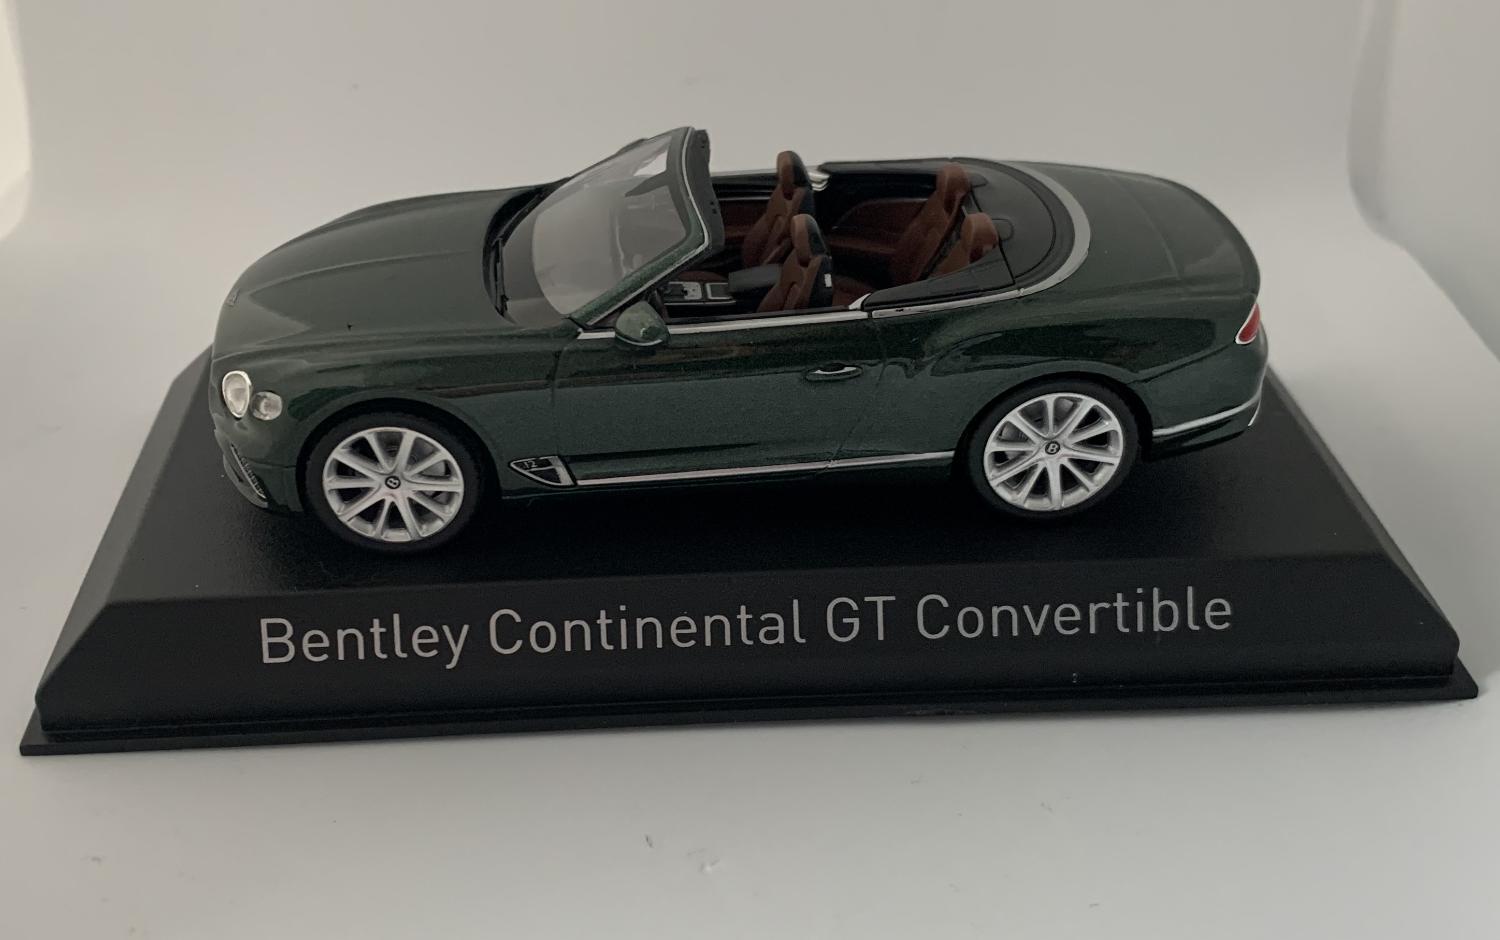 Bentley Continental GT Convertible 2019 in metallic verdant 1:43 scale model from Norev